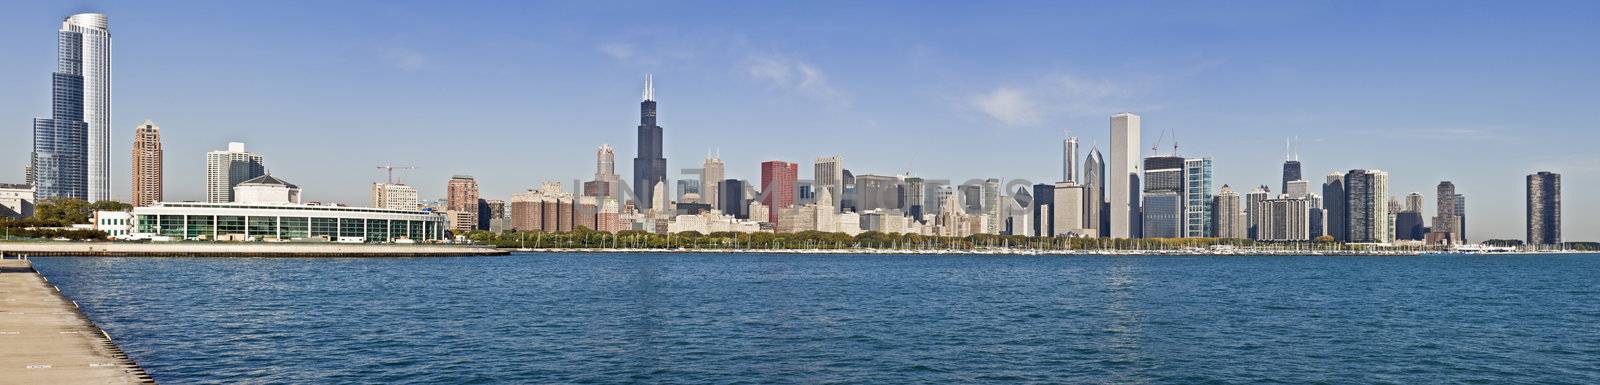 XXXL panorama of downtown Chicago